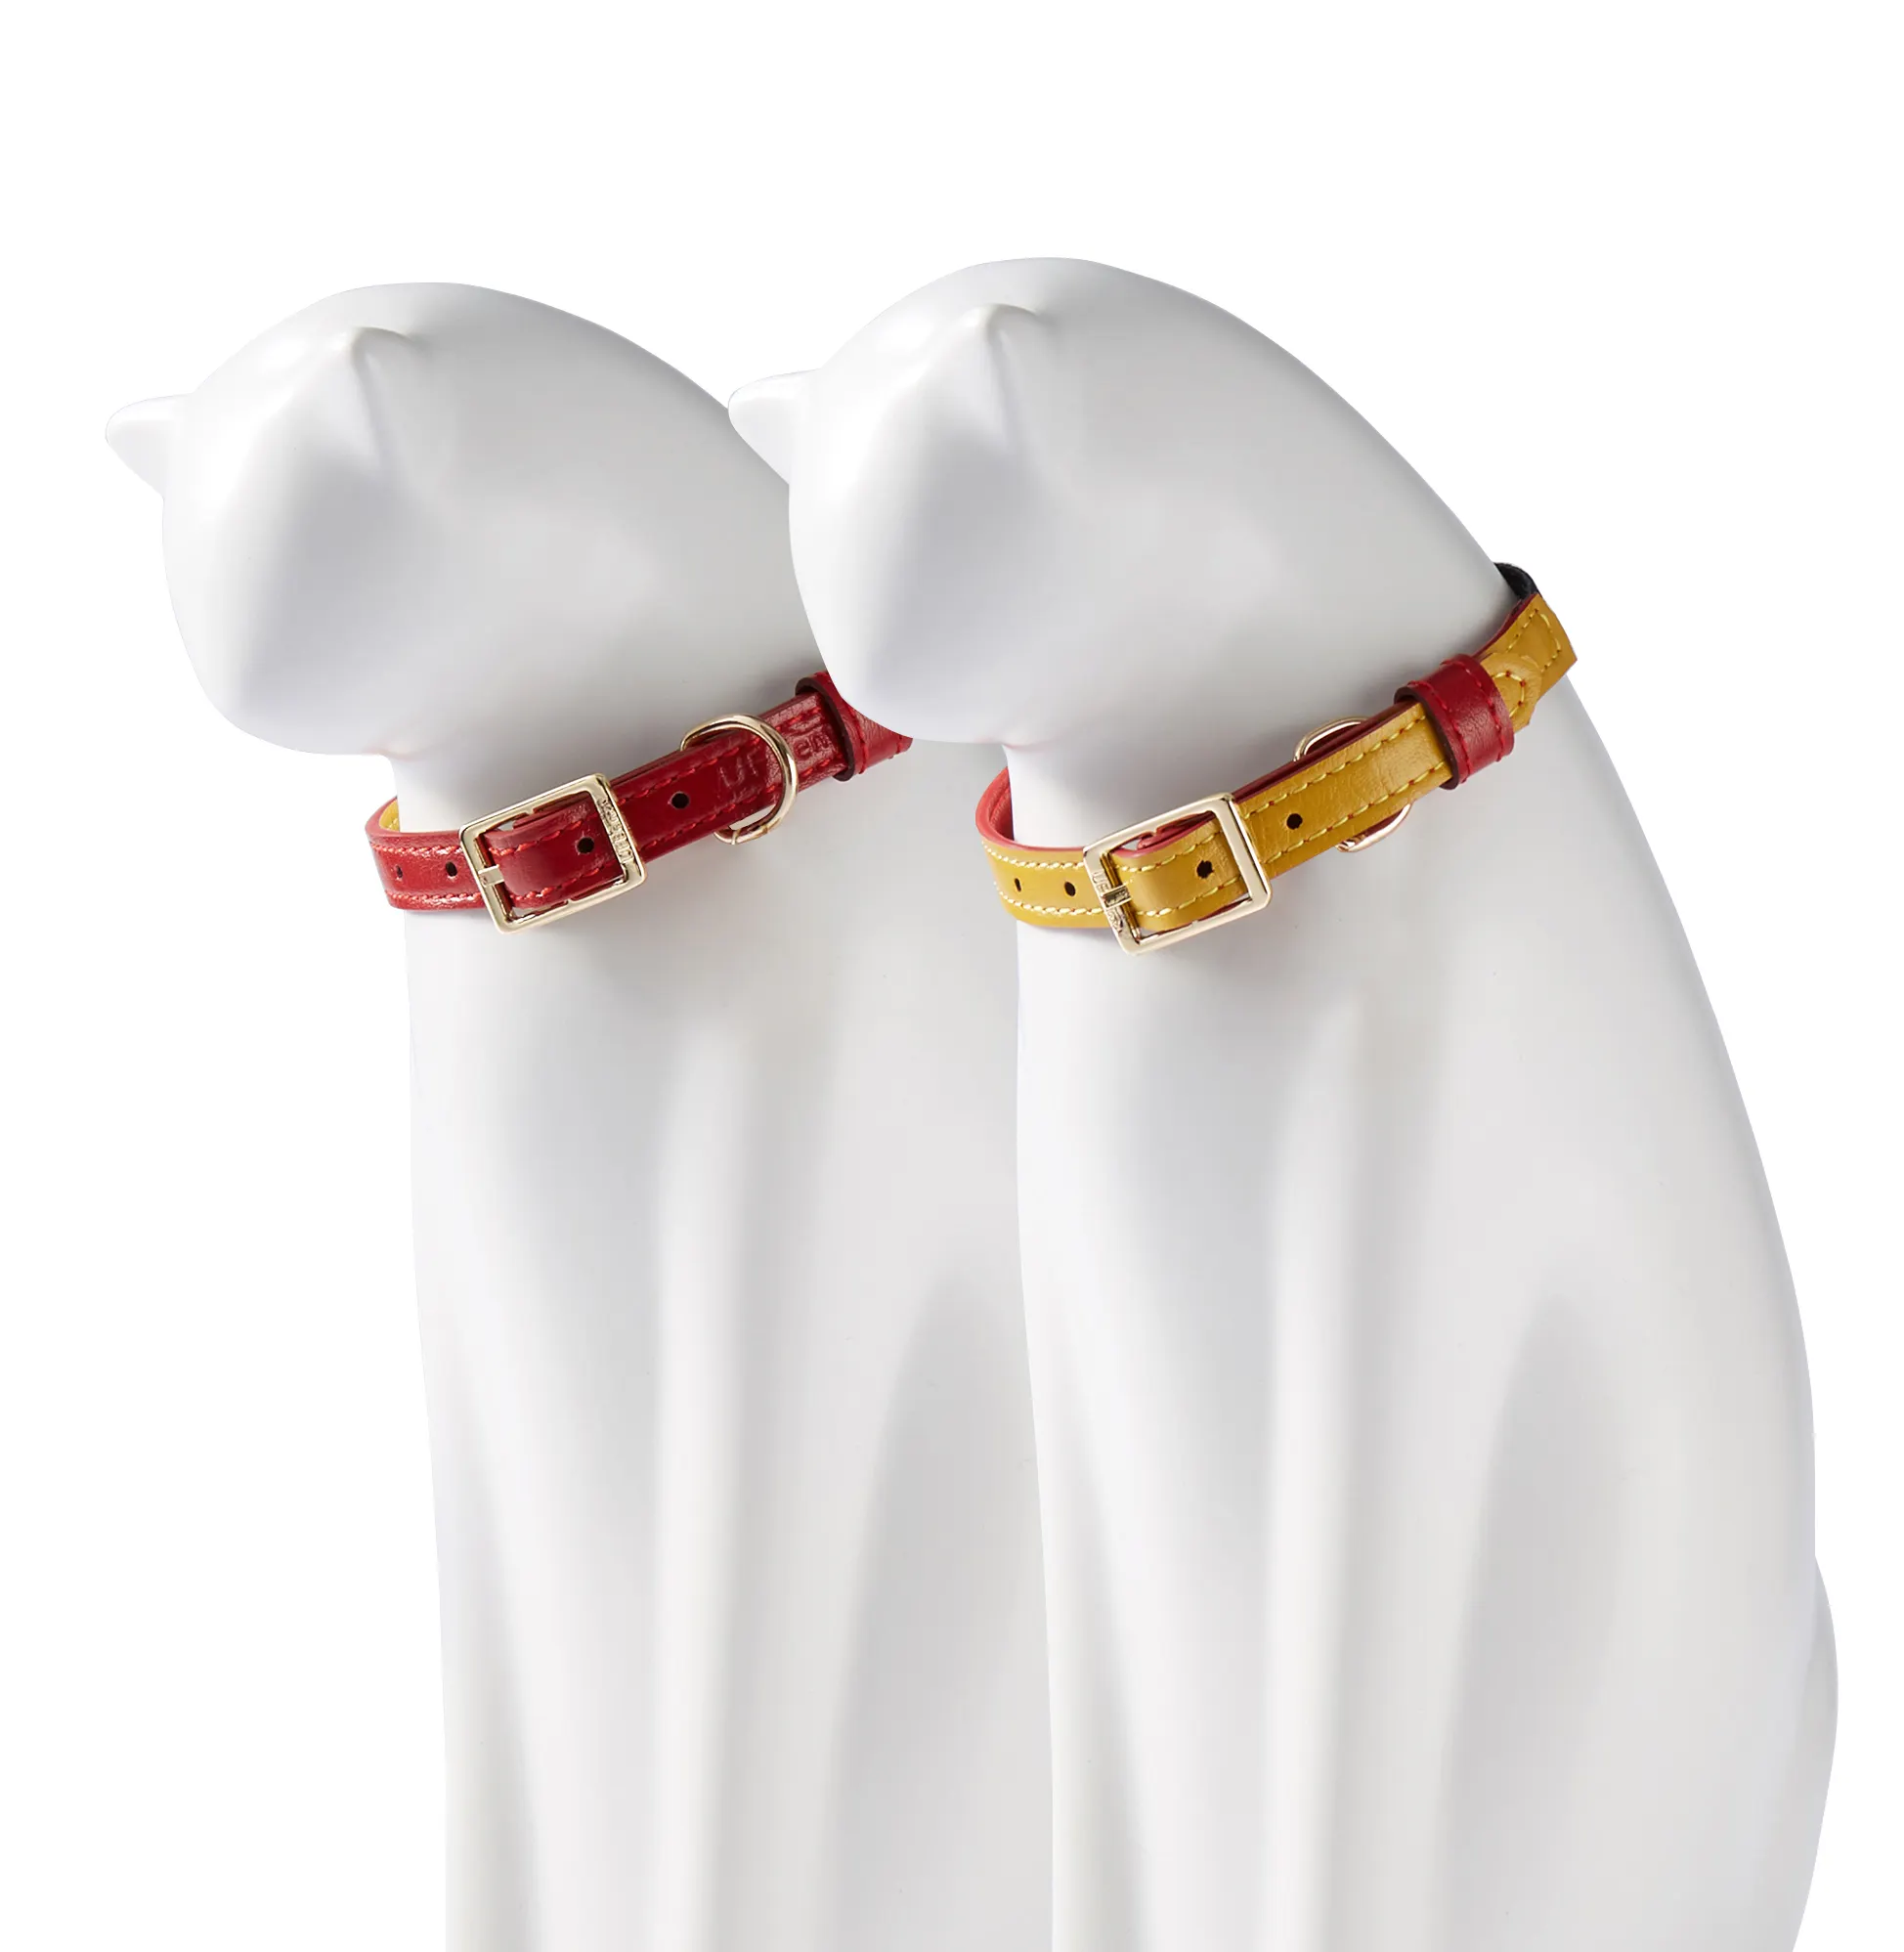 UFBemo Adjustable custom pattern luxury PU leather pet collar soft durable dog collar